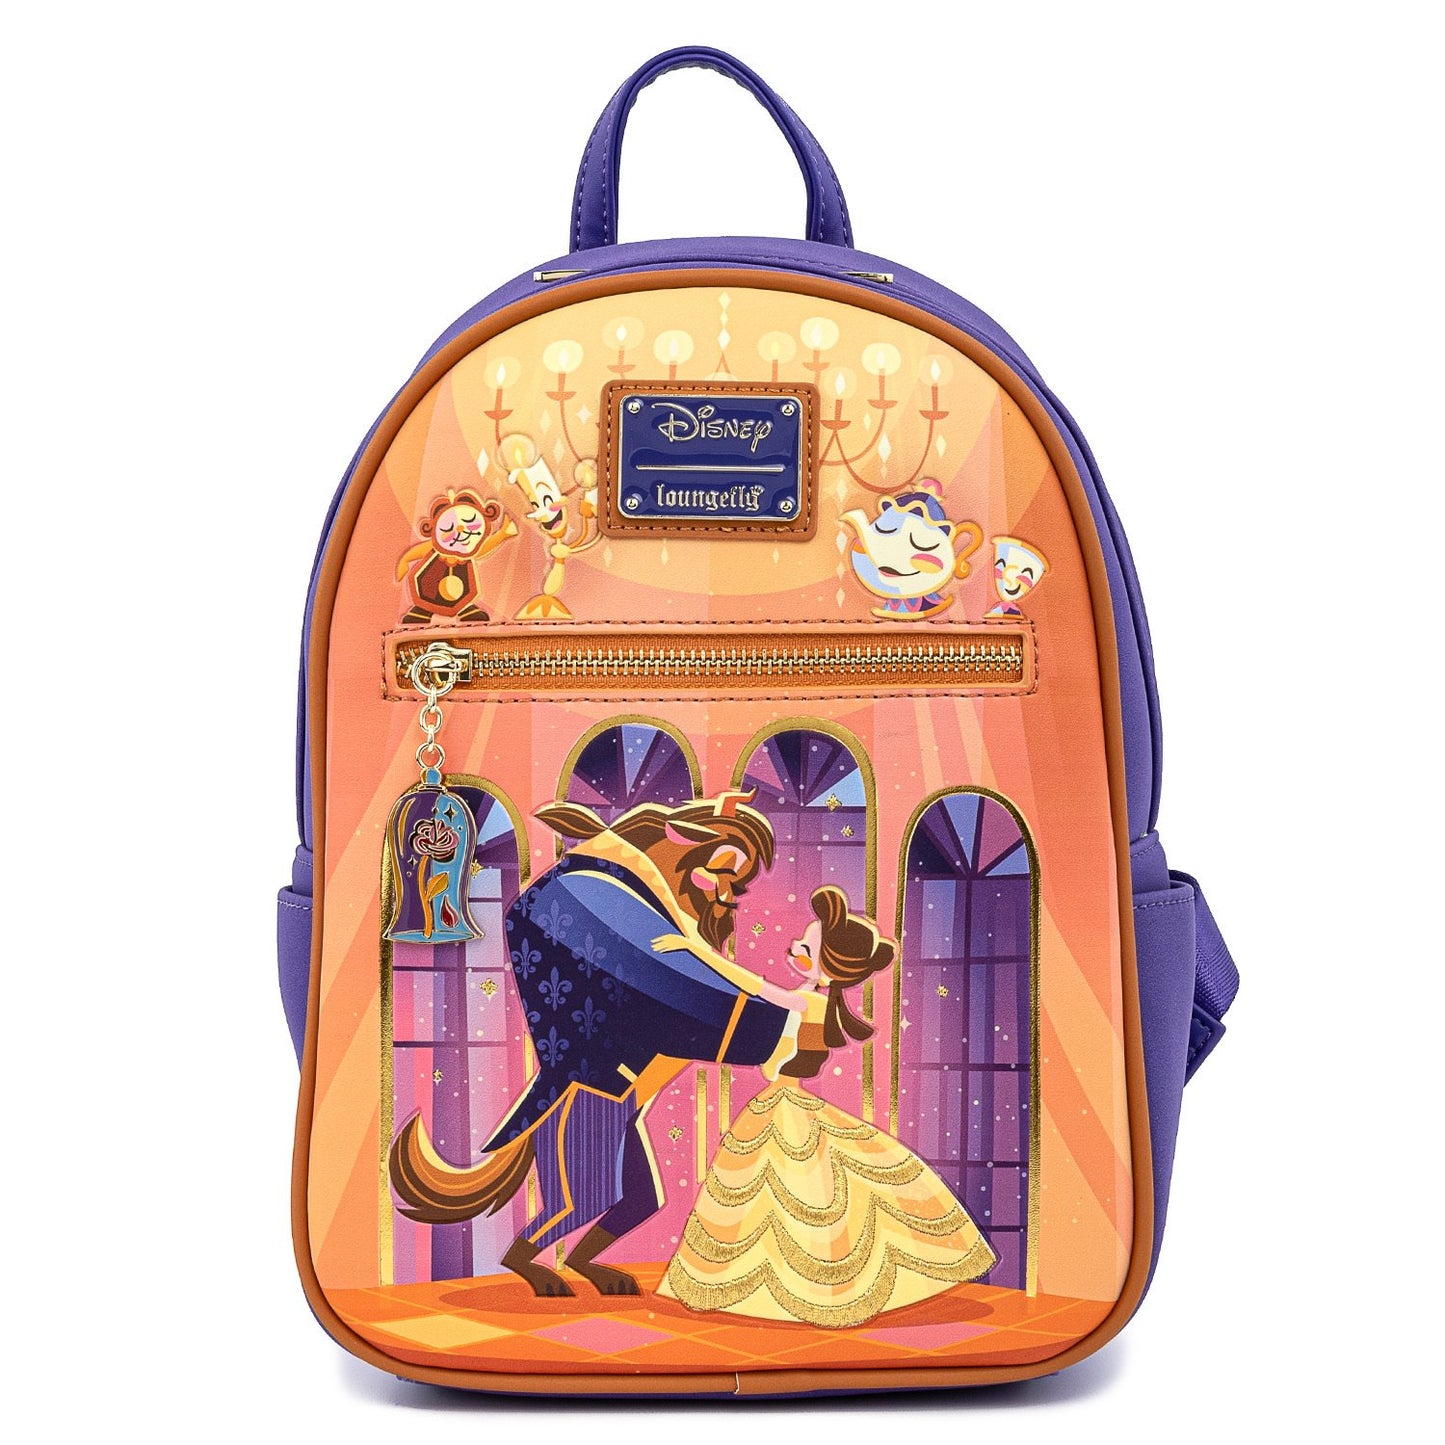 Sleeping Beauty Floral Scene Loungefly Disney Mini Backpack Bag